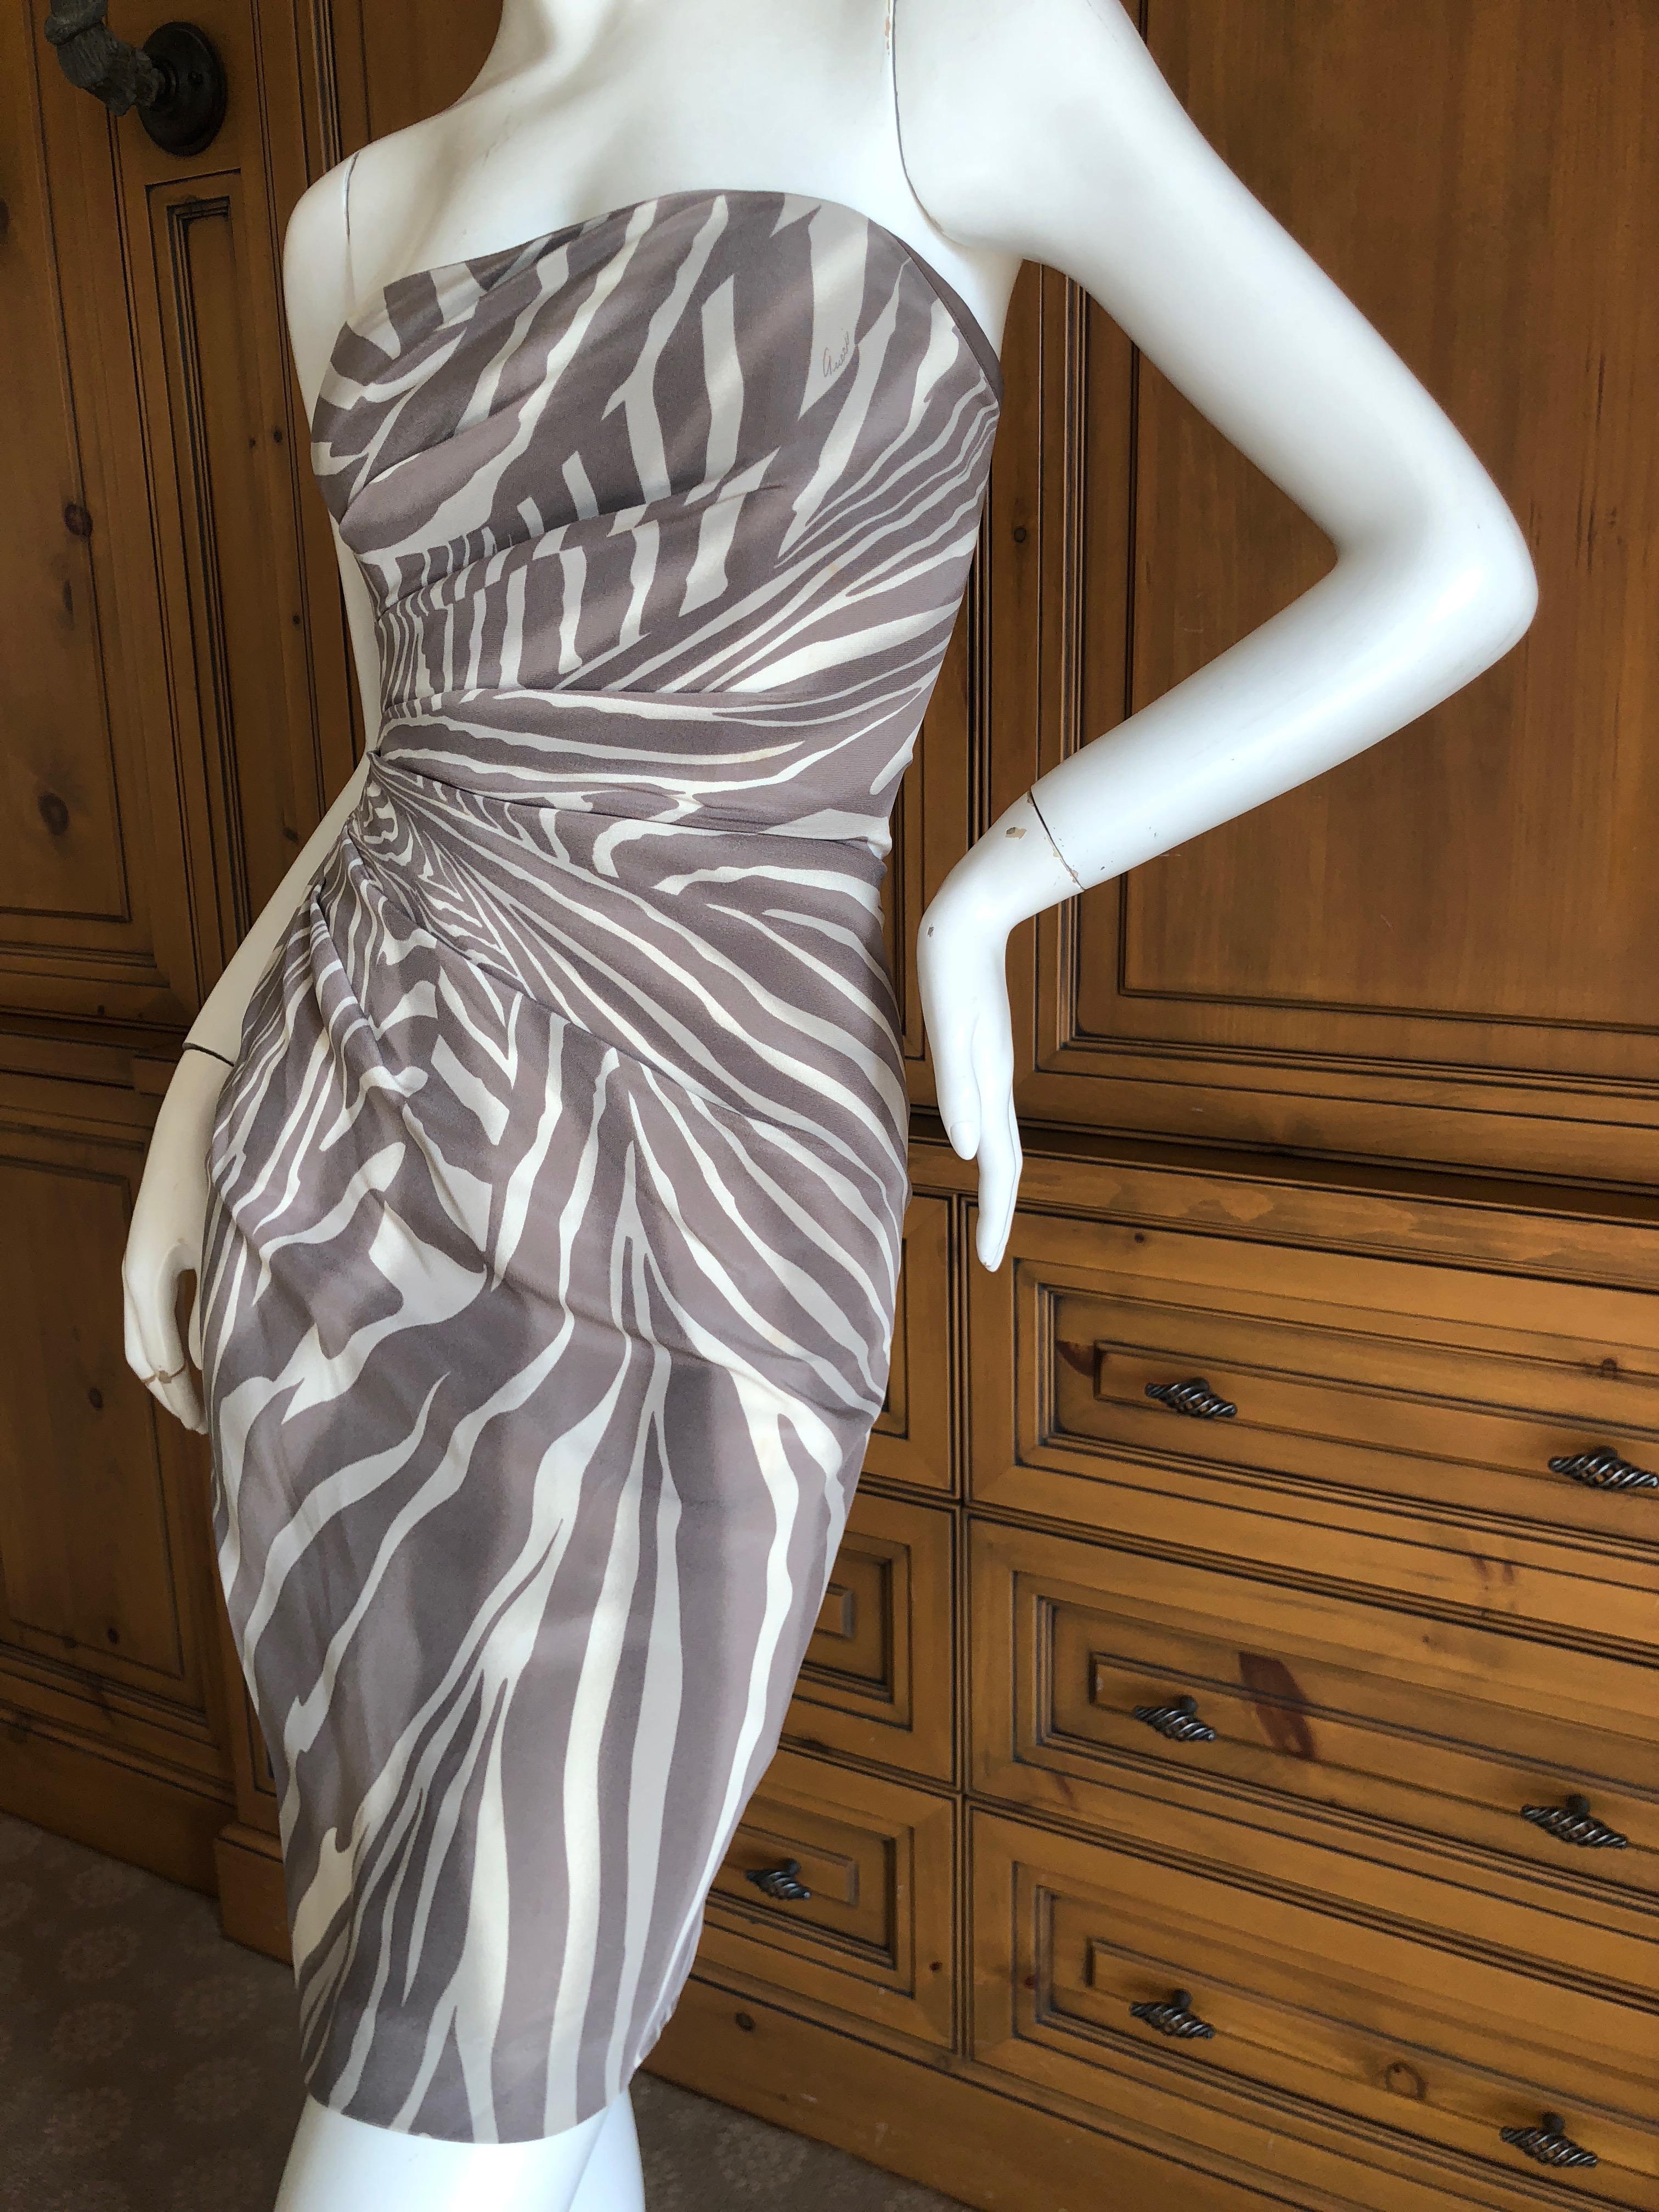 Gucci by Tom Ford Silk Strapless Zebra Pattern Mini Dress
Lots of stretch 
 Size 38
Bust 34